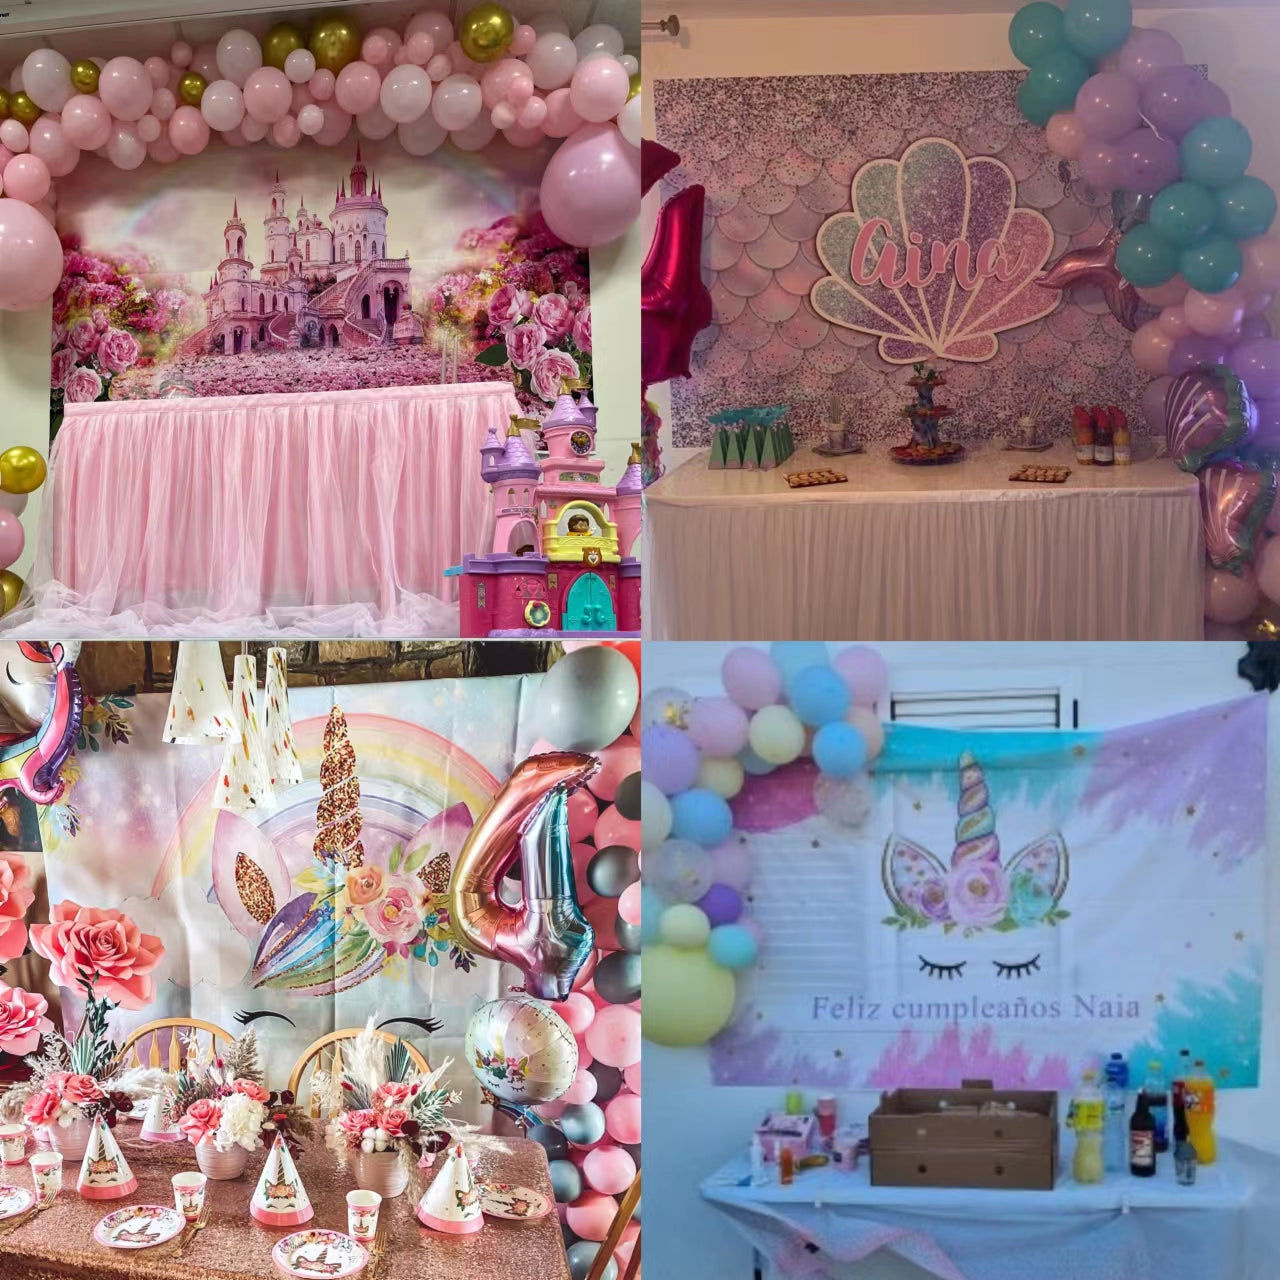 Donuts Birthday Decoration Backdrop Banner